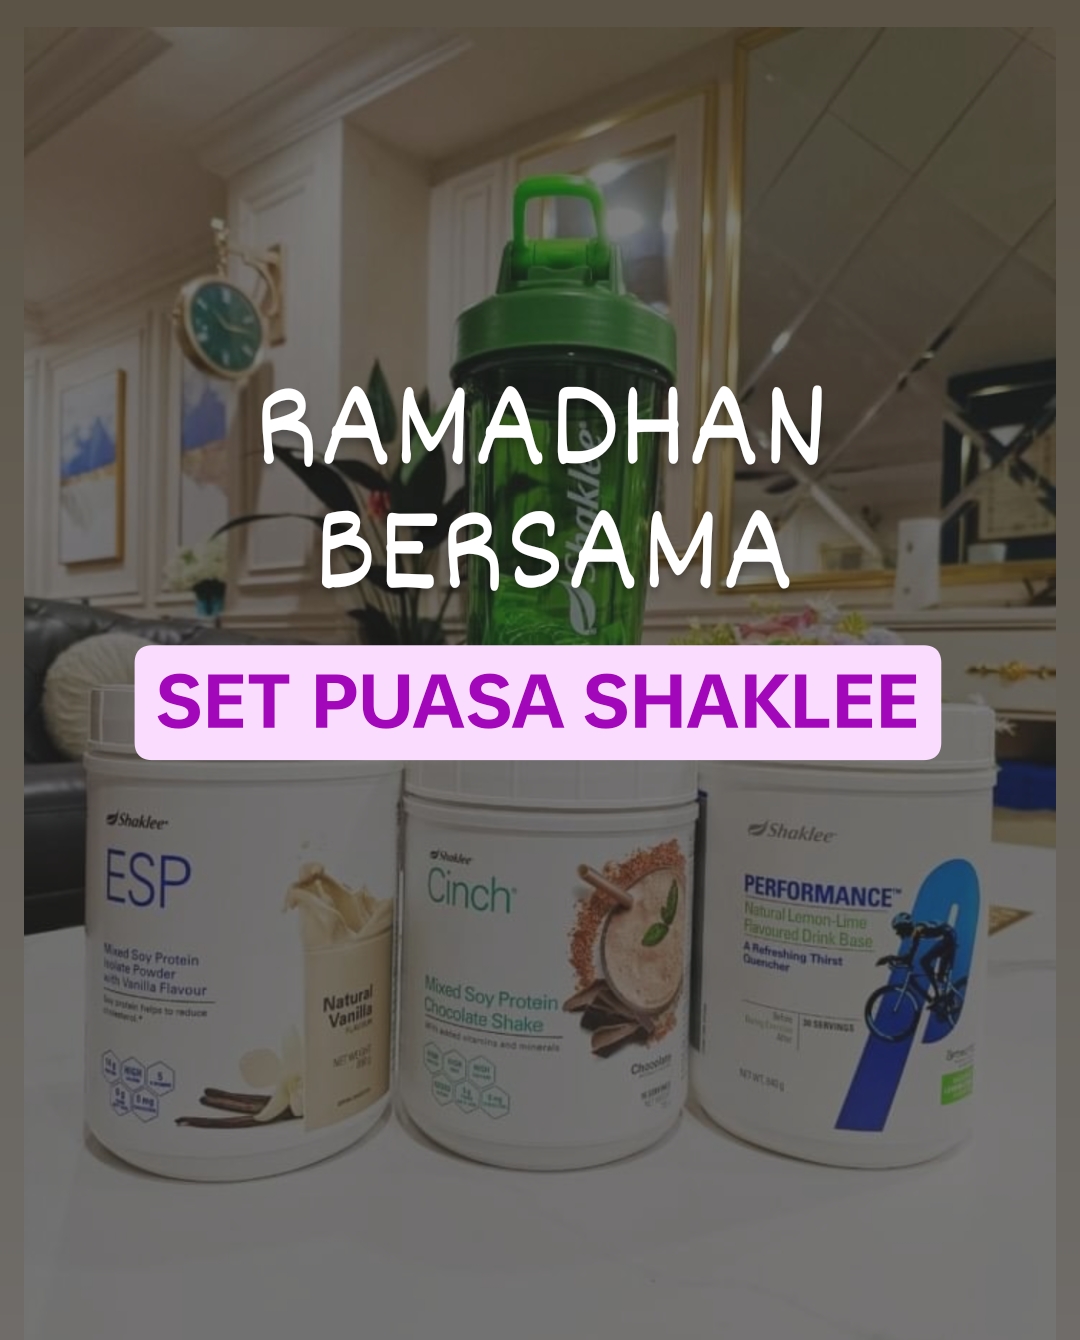 Ramadhan bersama dengan Set Puasa Shaklee